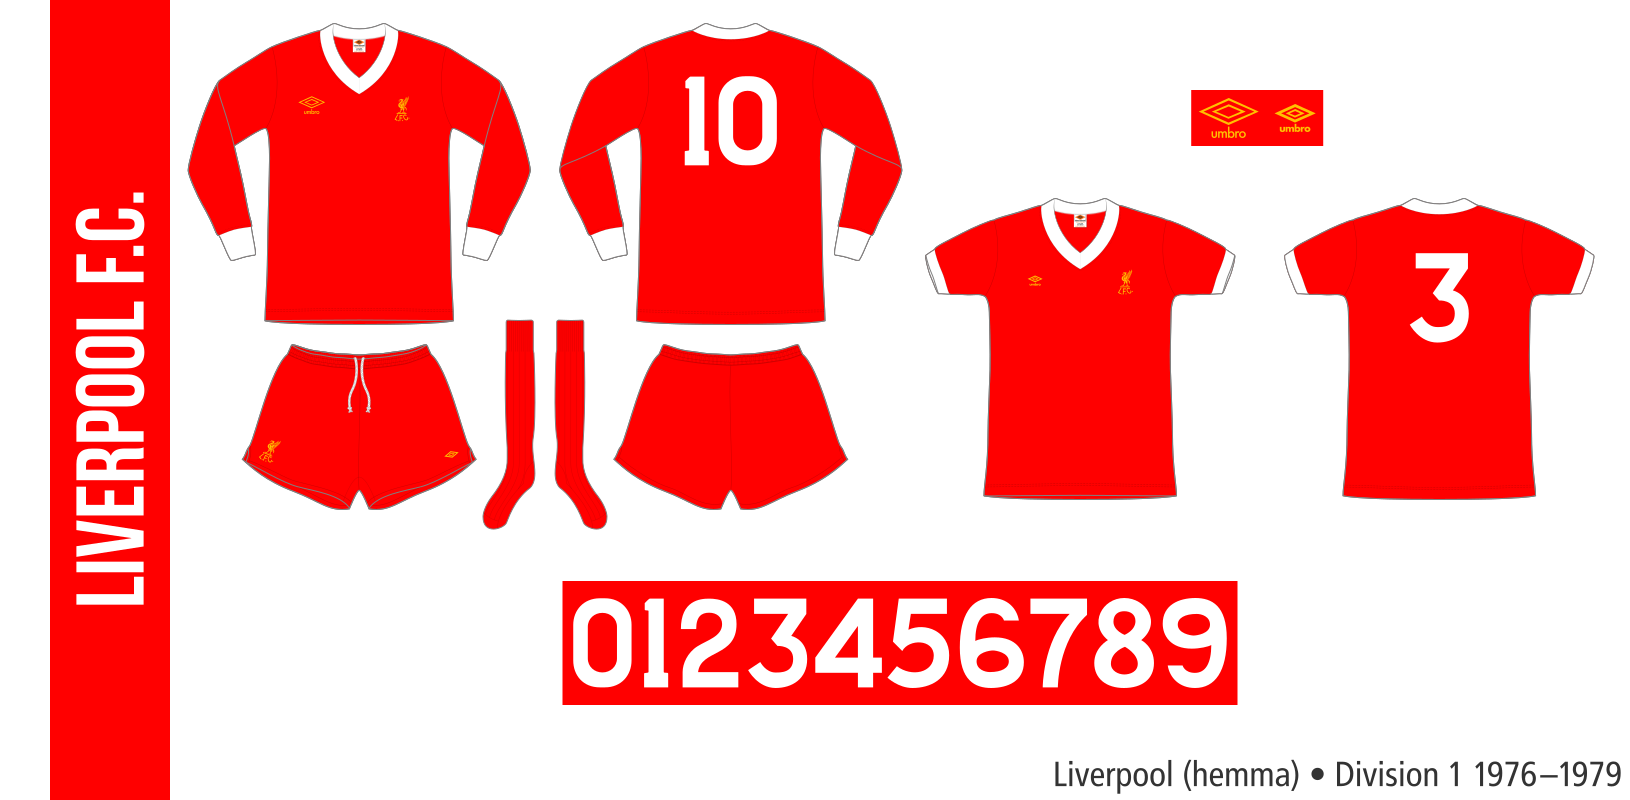 Liverpool 1976–1979 (hemma)